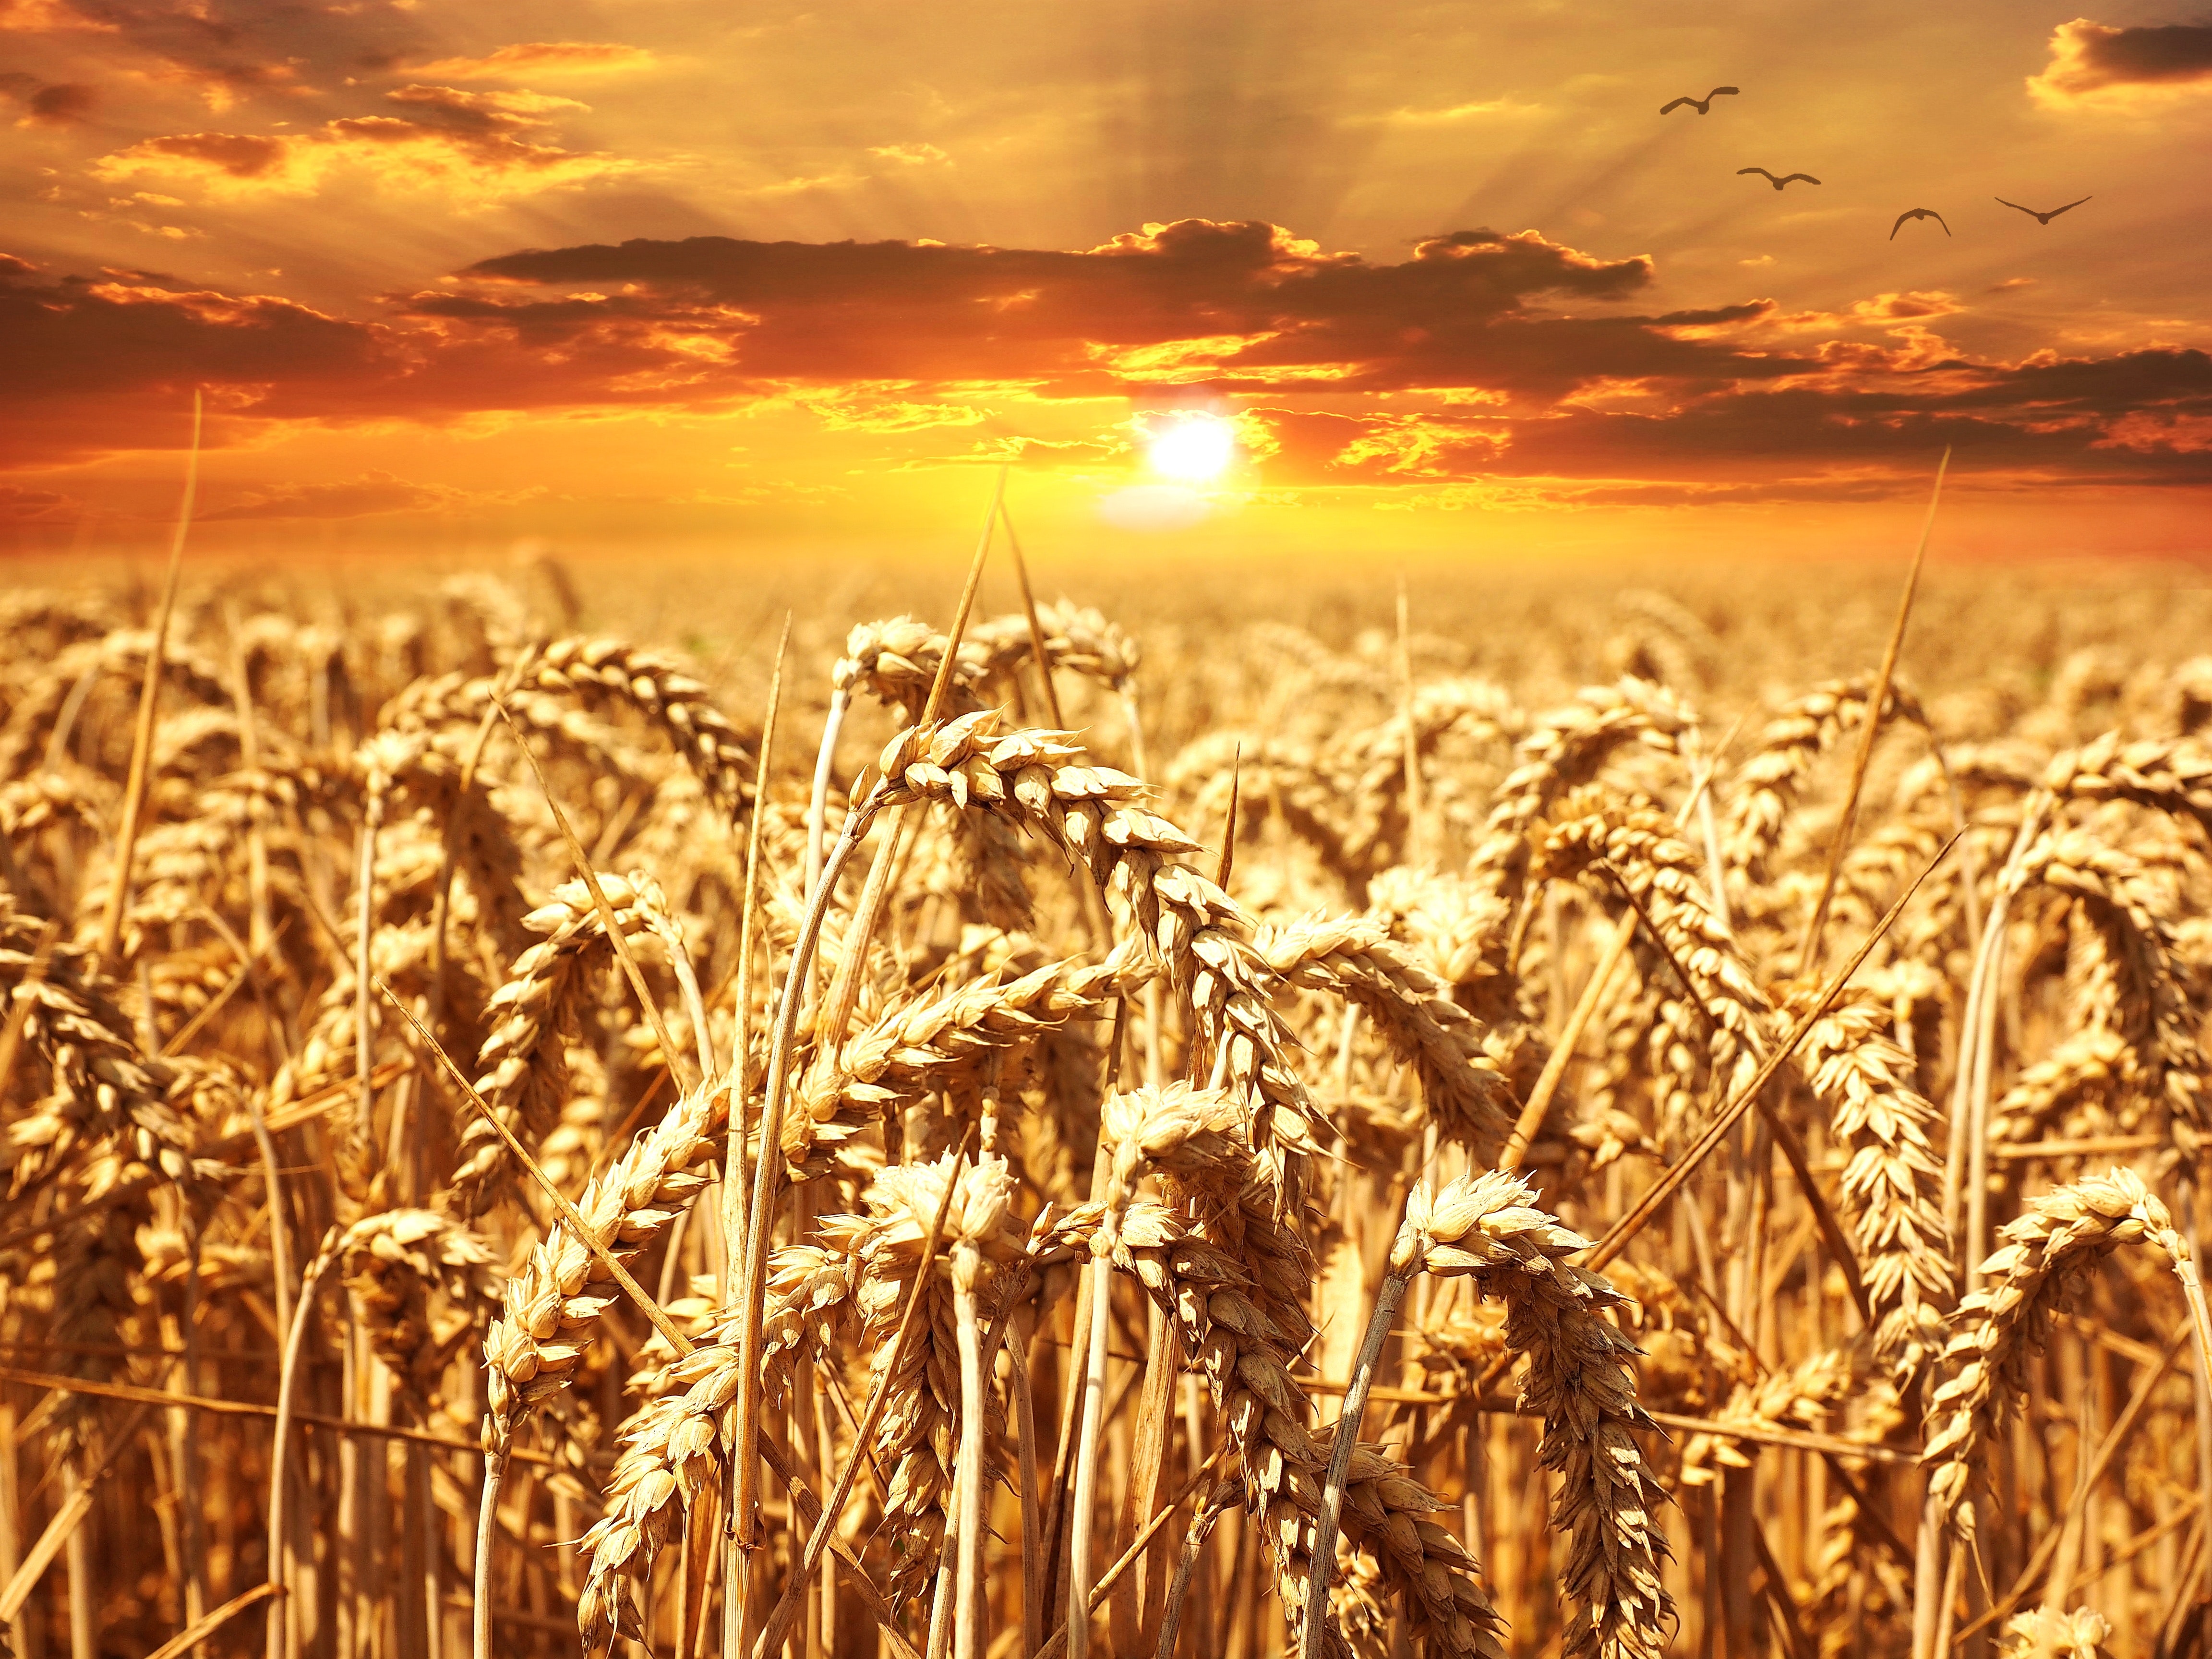 1000+ Engaging Wheat Field Photos · Pexels · Free Stock Photos